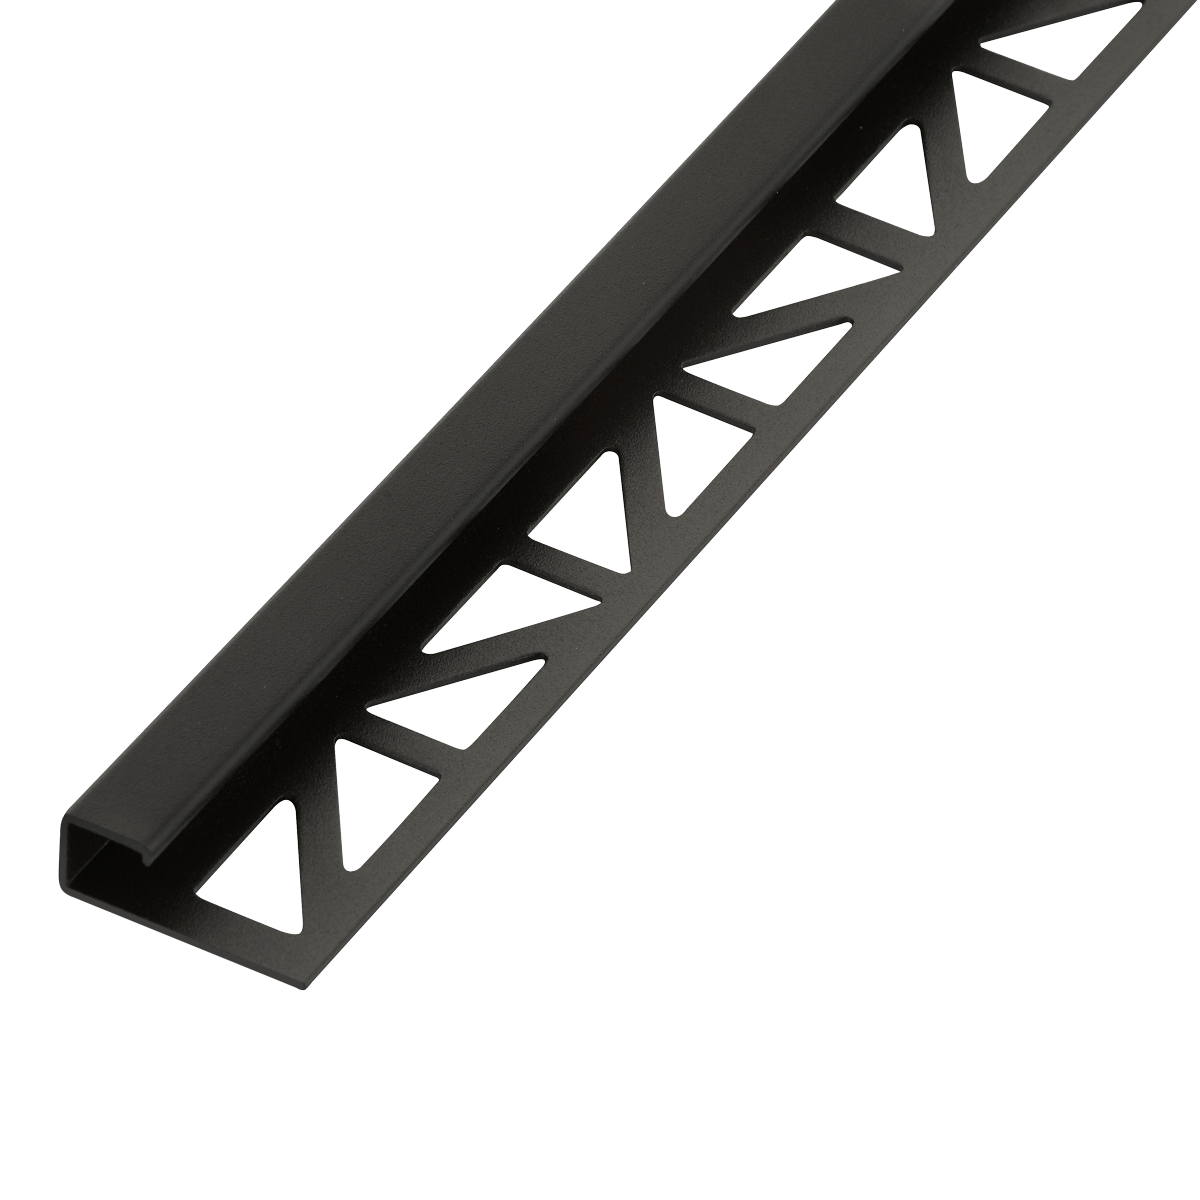 Blanke Fliesenschiene CUBELINE quadratische Form Aluminium eloxiert schwarz matt 9 mm hoch 2,5 lang